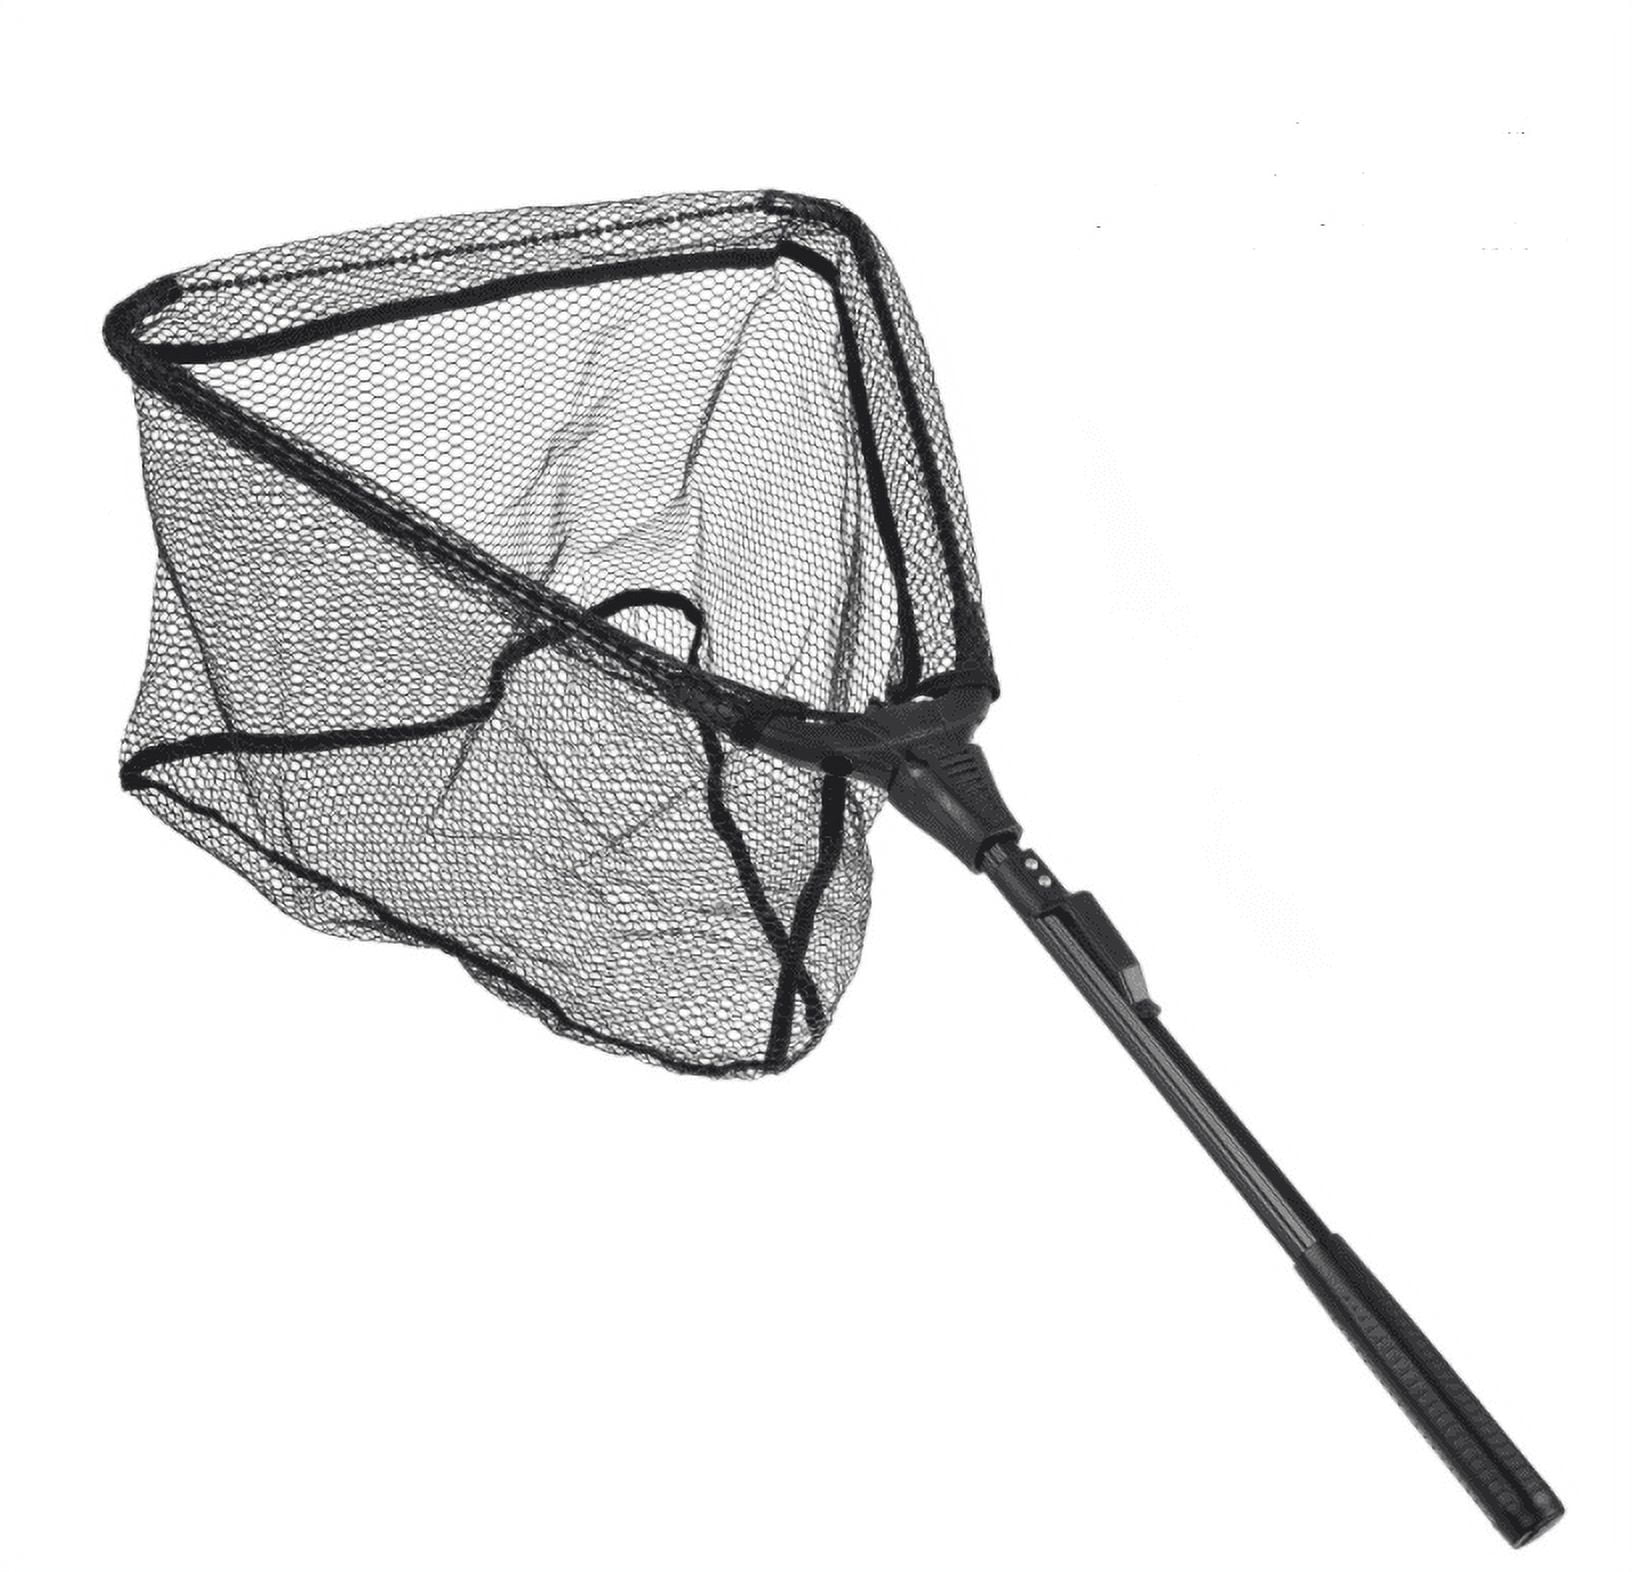 Foldable Fishing net for Steelhead,Salmon,Kayak, Catfish, Bass,Trout  Fishing,Telescopic Extending Fish Landing net and Durable Soft Mesh for